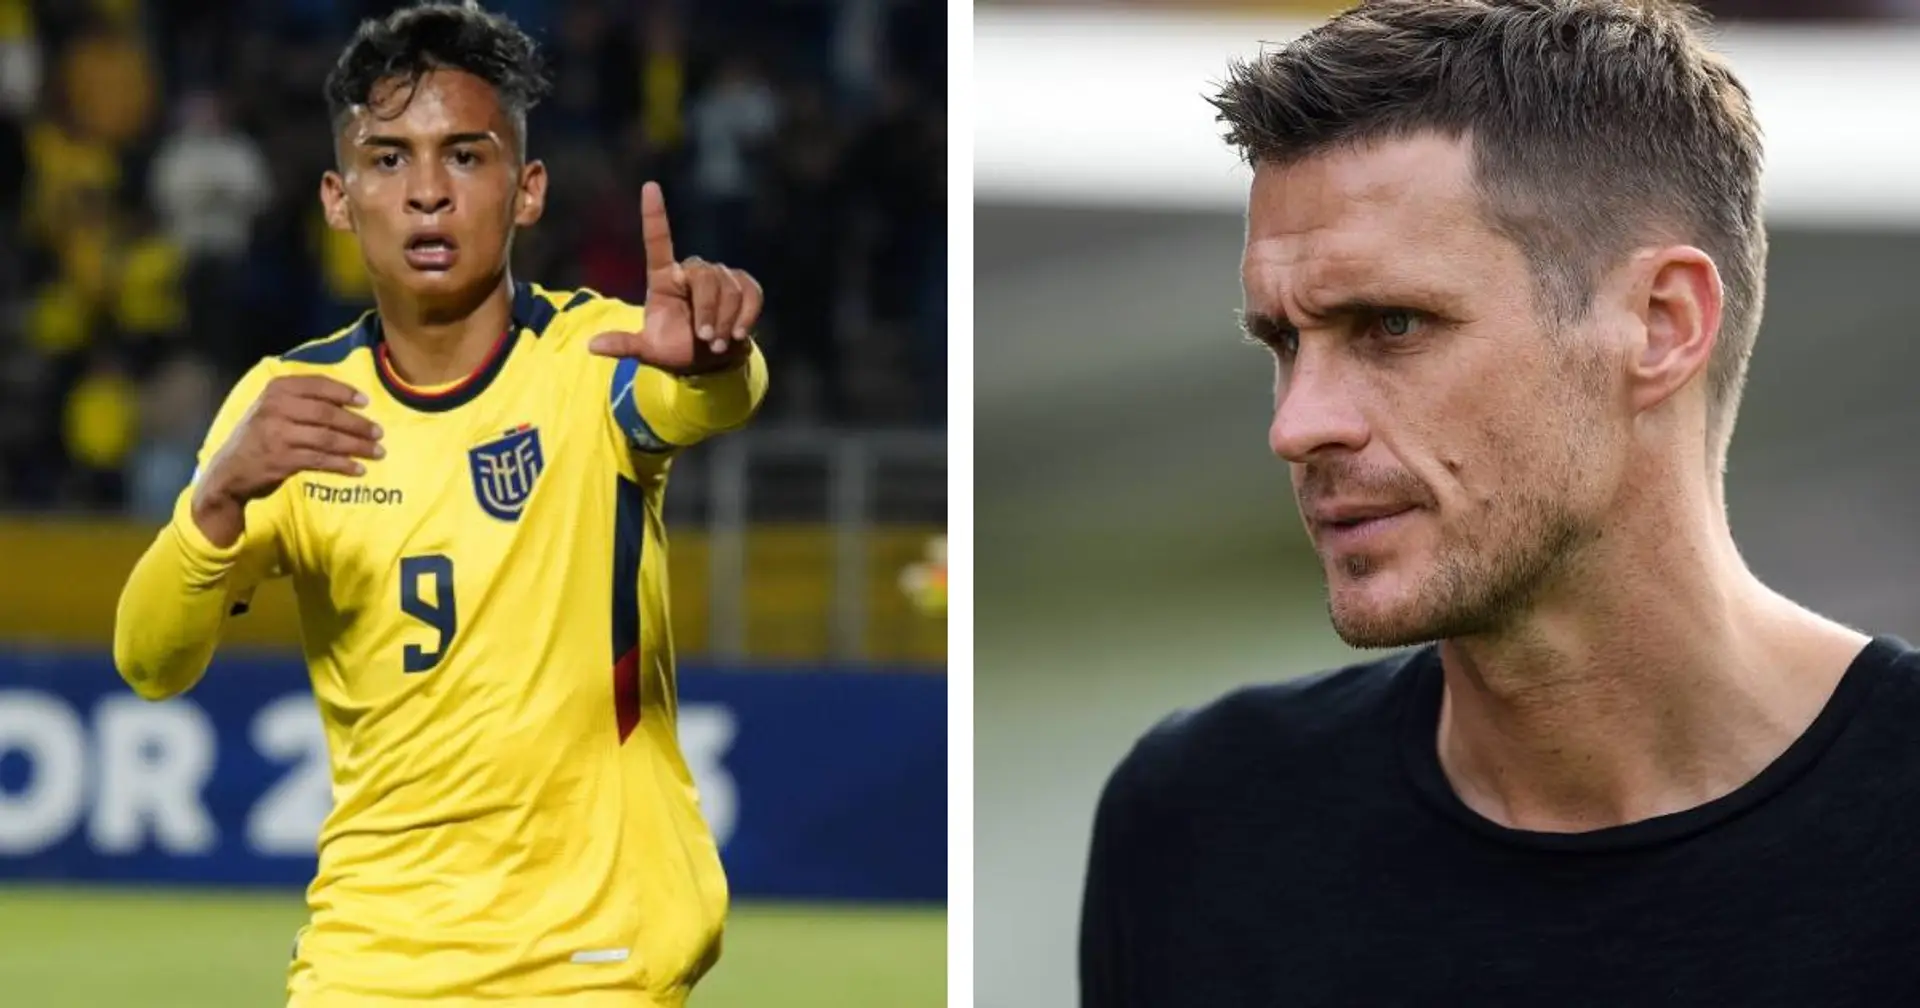 Nach Kendry Paez beobachtet BVB mit Michael Bermudez das nächste Talent aus Ecuador - Bericht